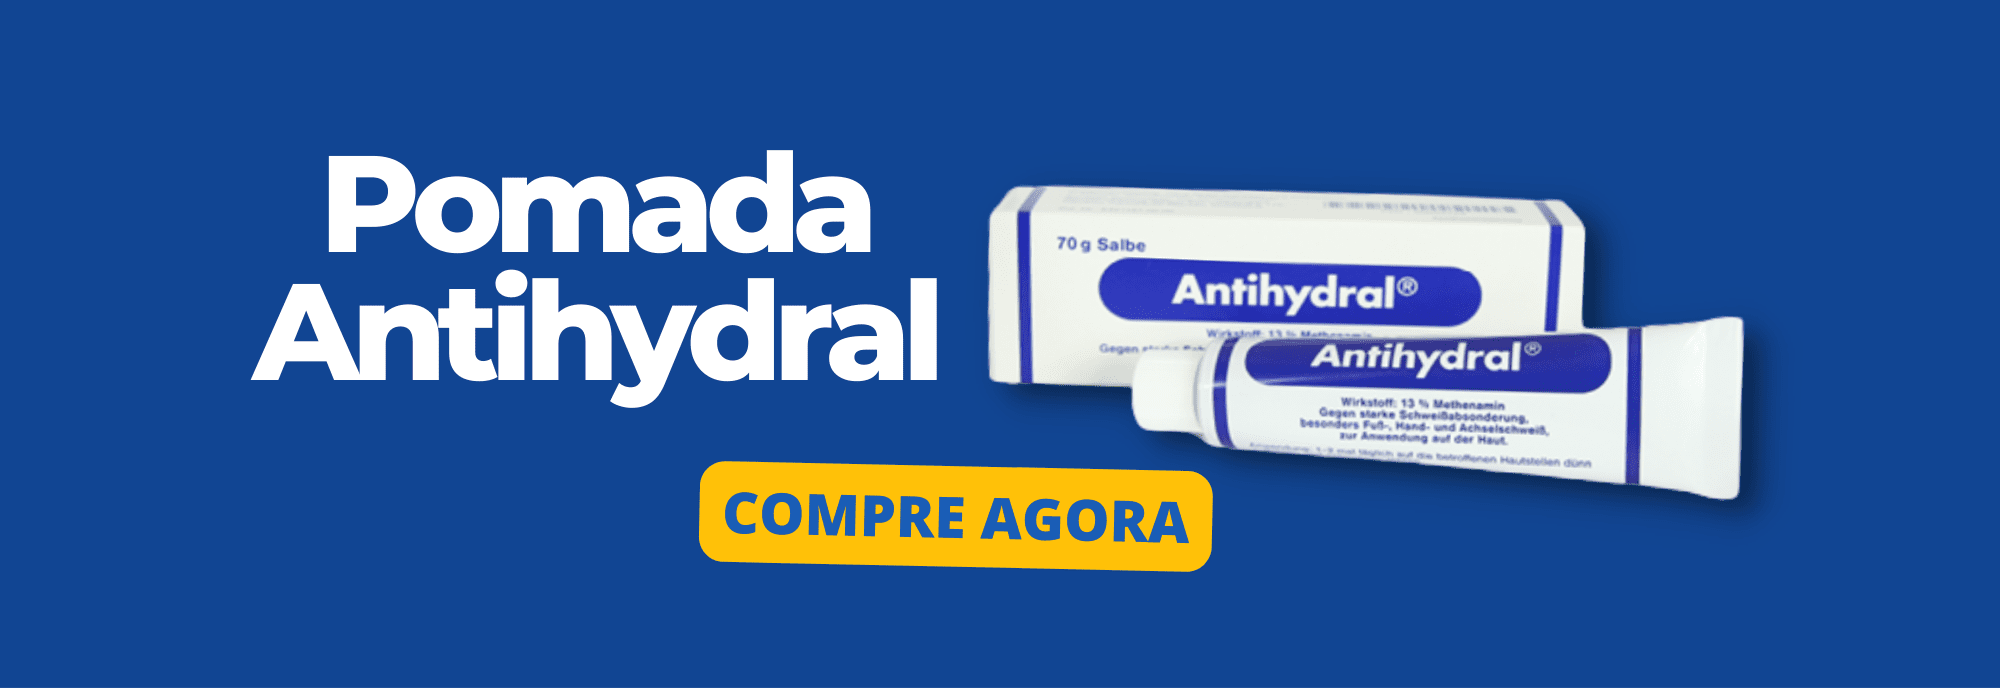 pomada-antihydral